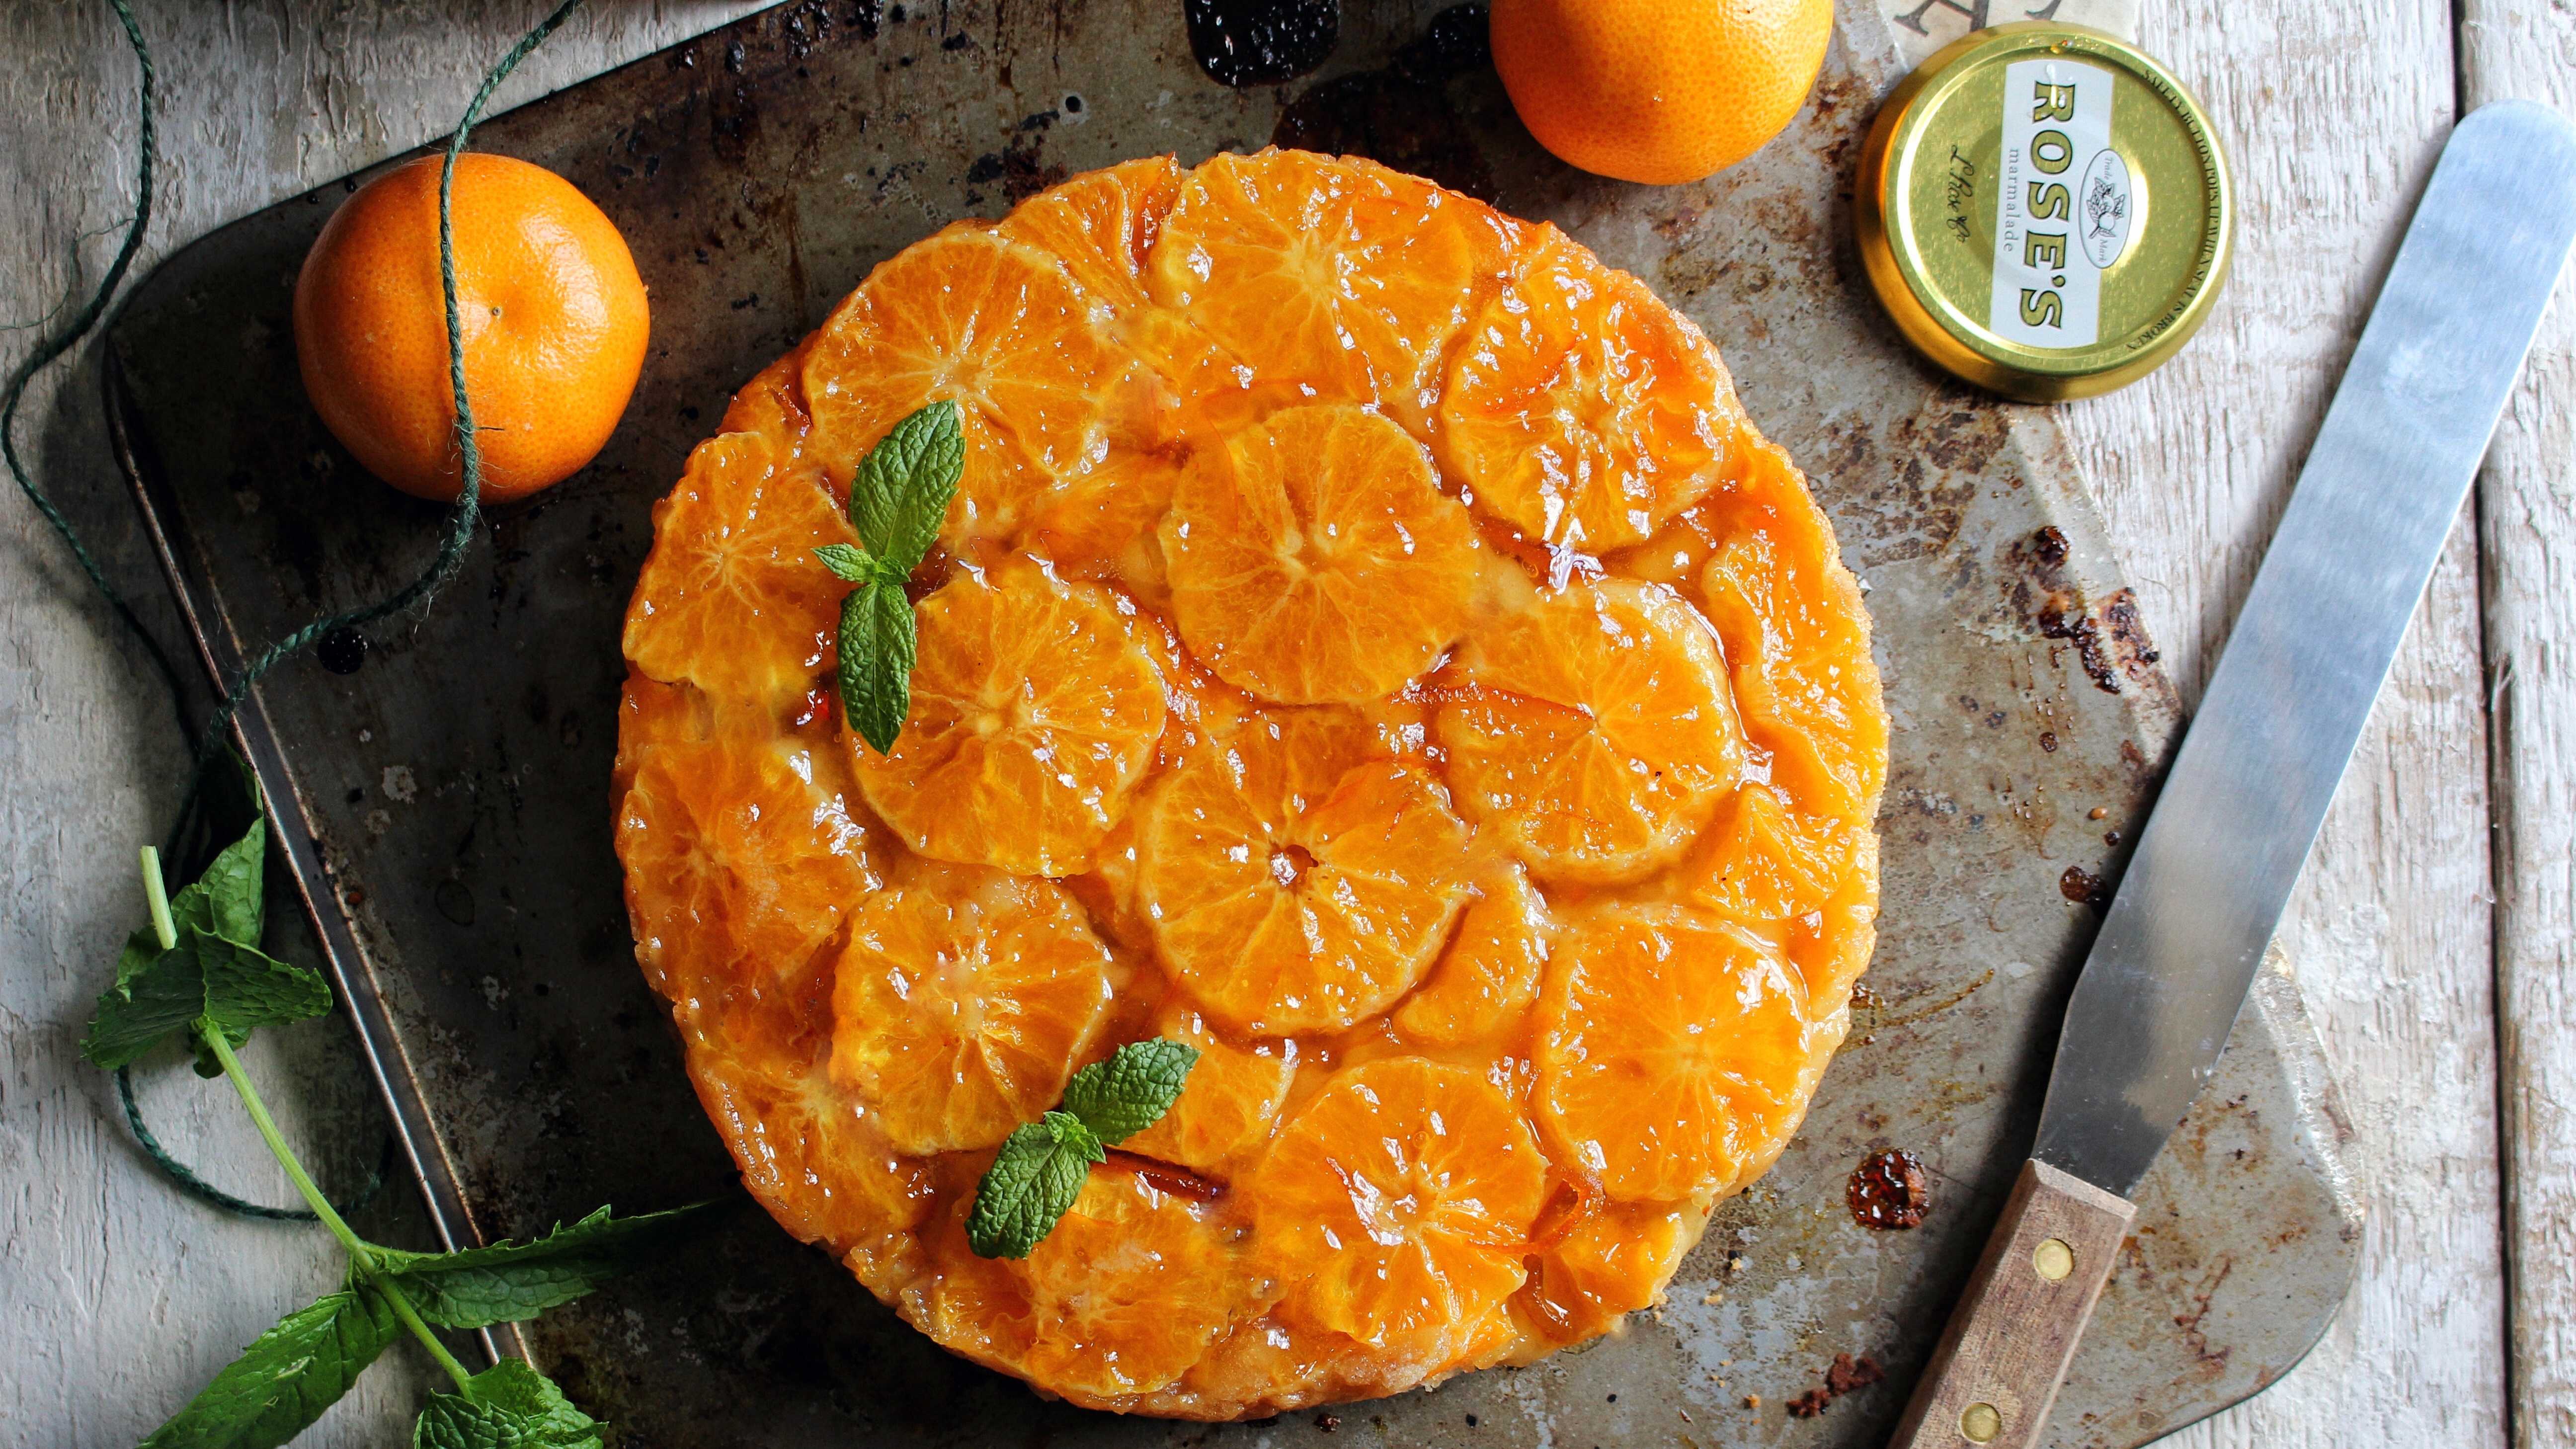 Рецепт пирога с мандаринами в духовке рецепт с фото